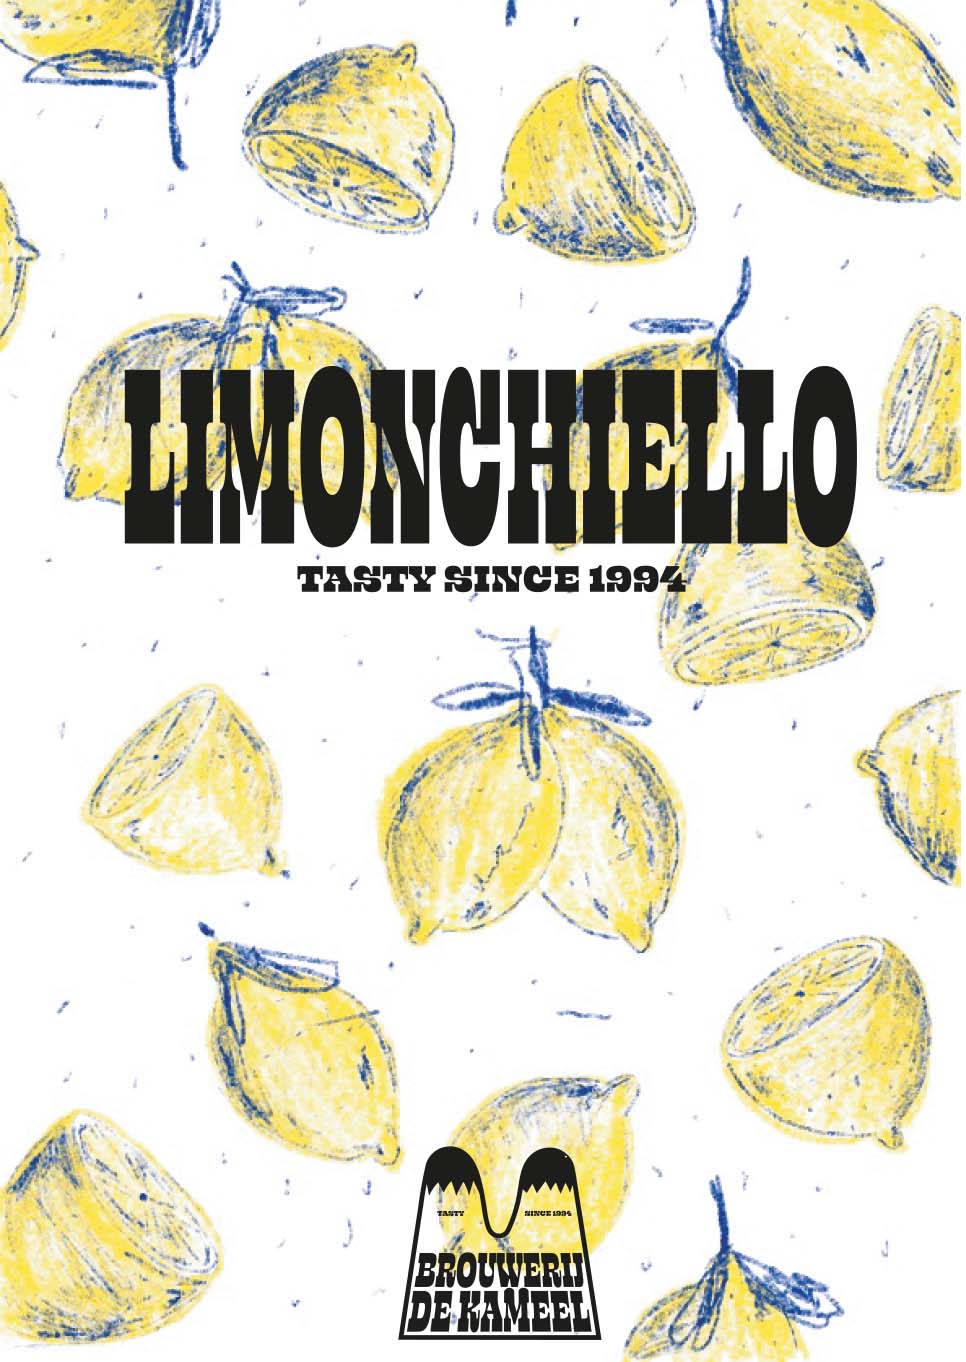 Limonchiello, Manon Lambeens